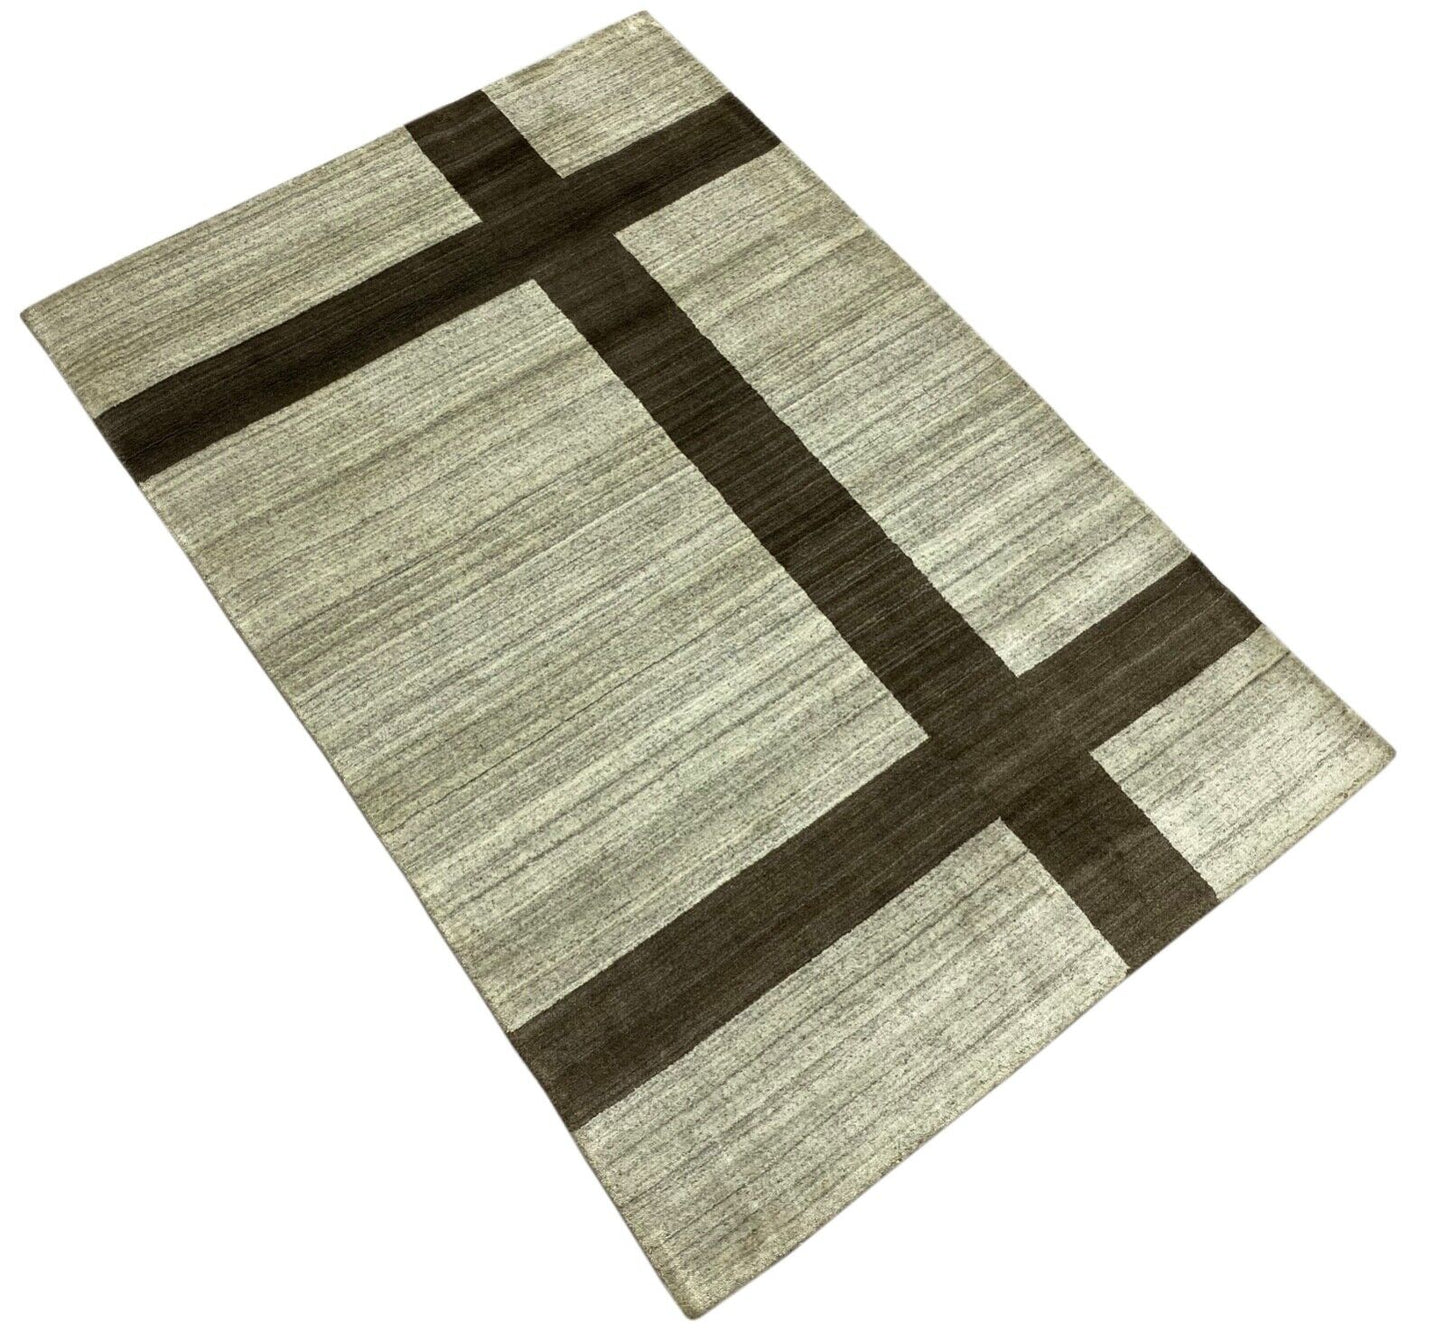 Teppich 100% Wolle Grau Beige Gabbeh lori Handgewebt 120x180 cm dp Garn S151